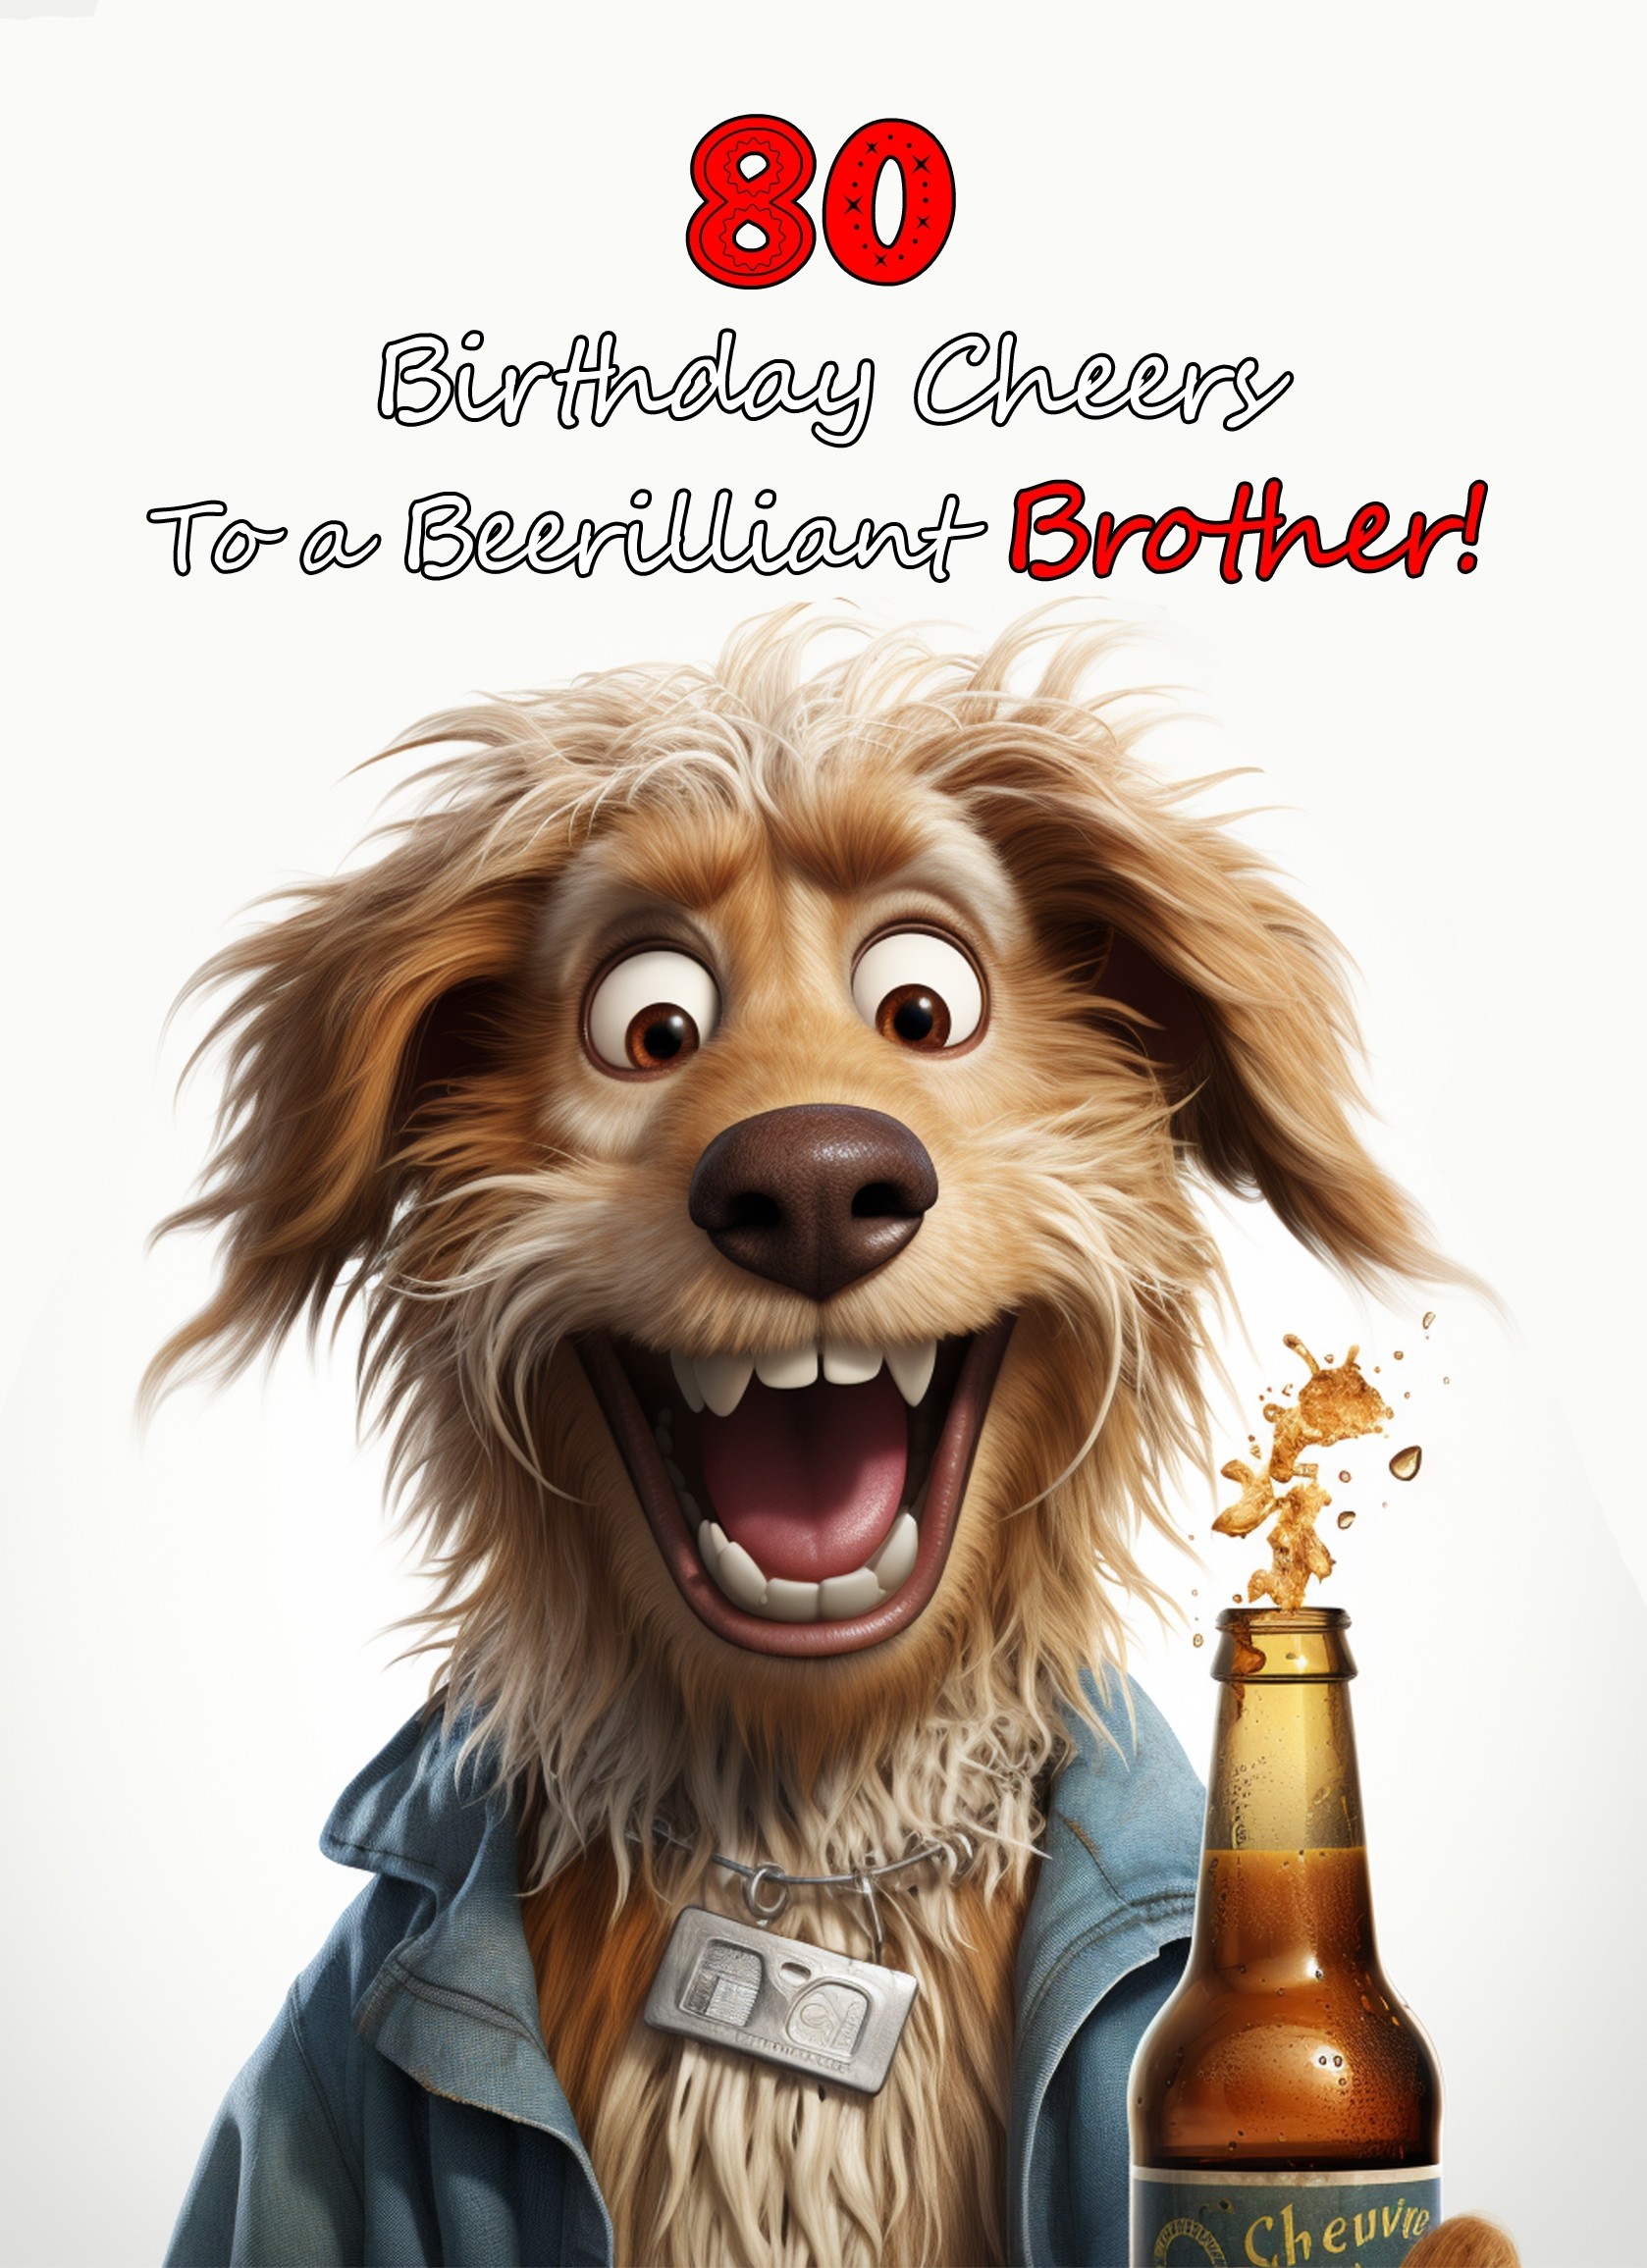 Brother 80th Birthday Card (Funny Beerilliant Birthday Cheers)